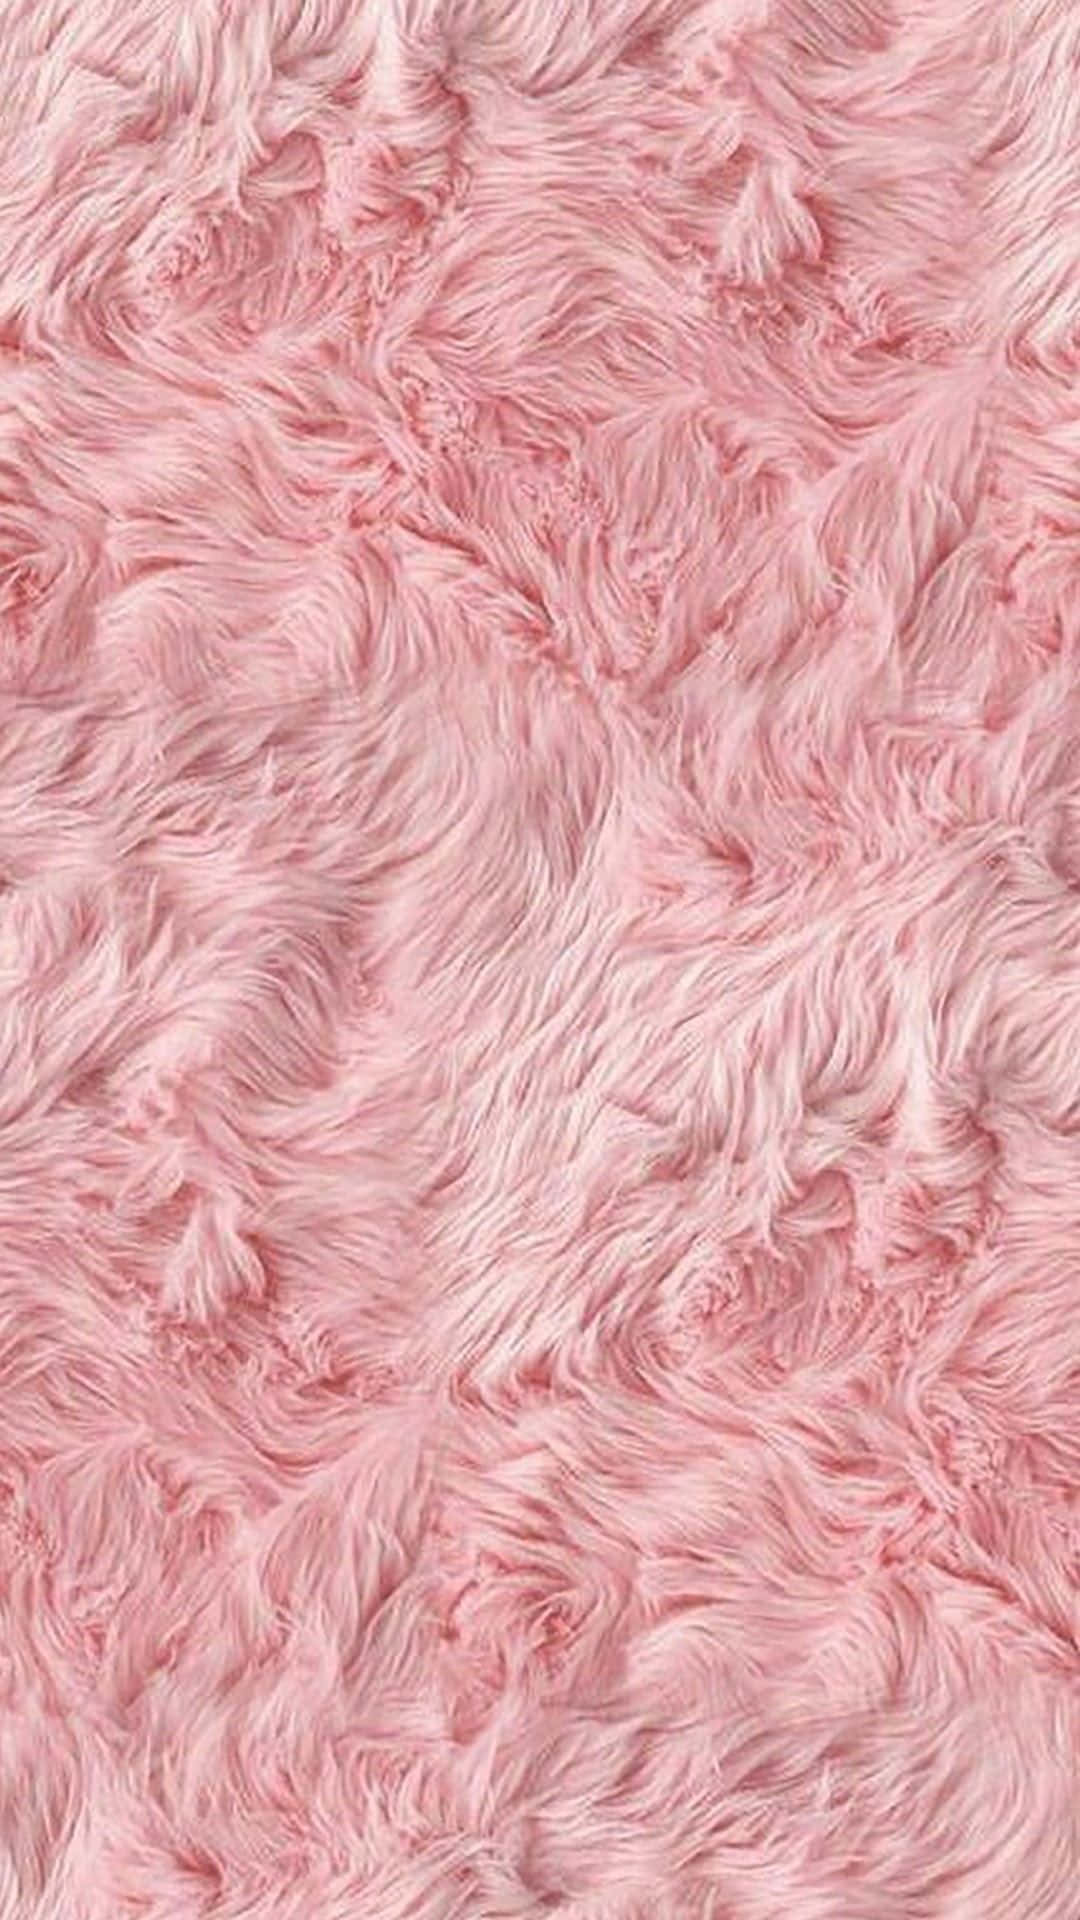 Fuzzy Wavy Fabric Wallpaper